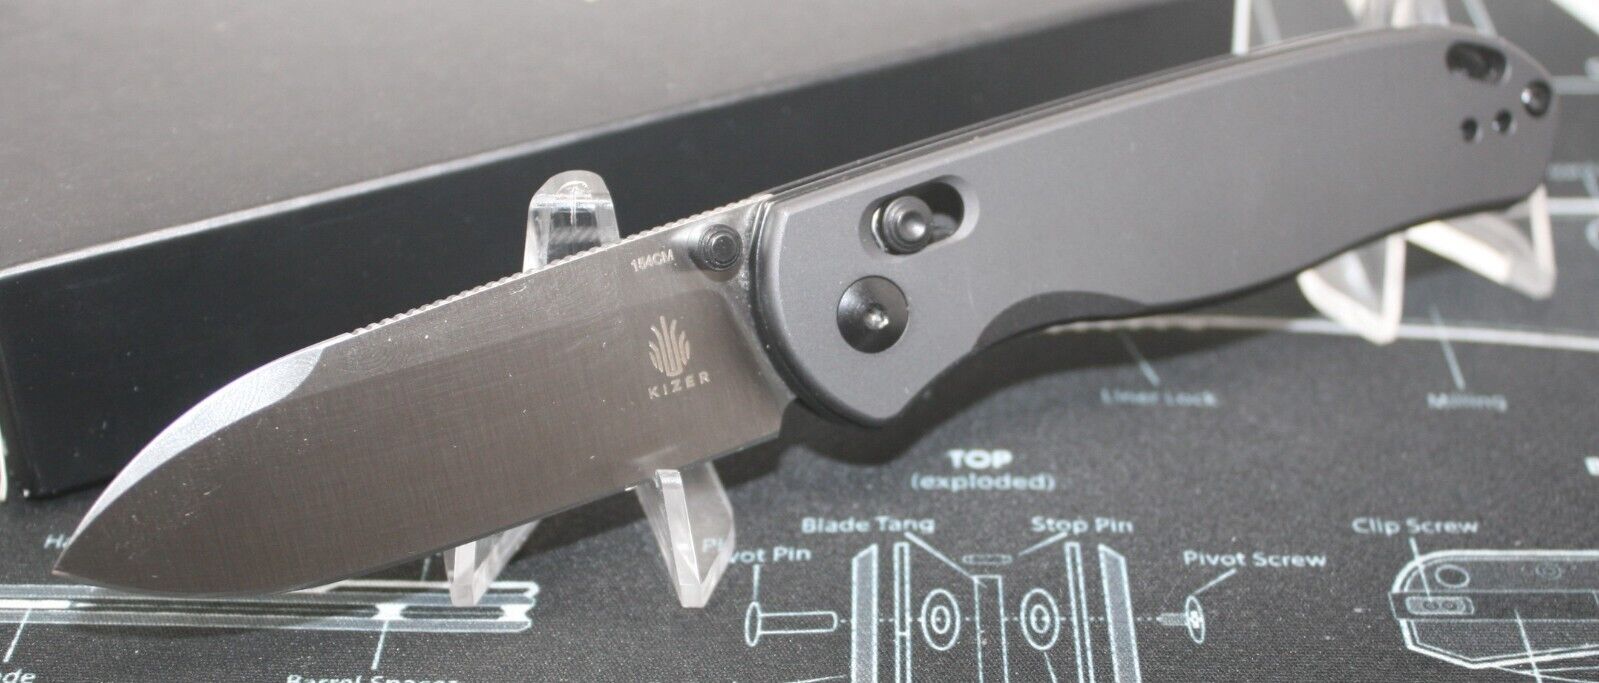 Kizer Drop Bear Axis Lock Gray 154CM blade aluminum handle new pocket knife